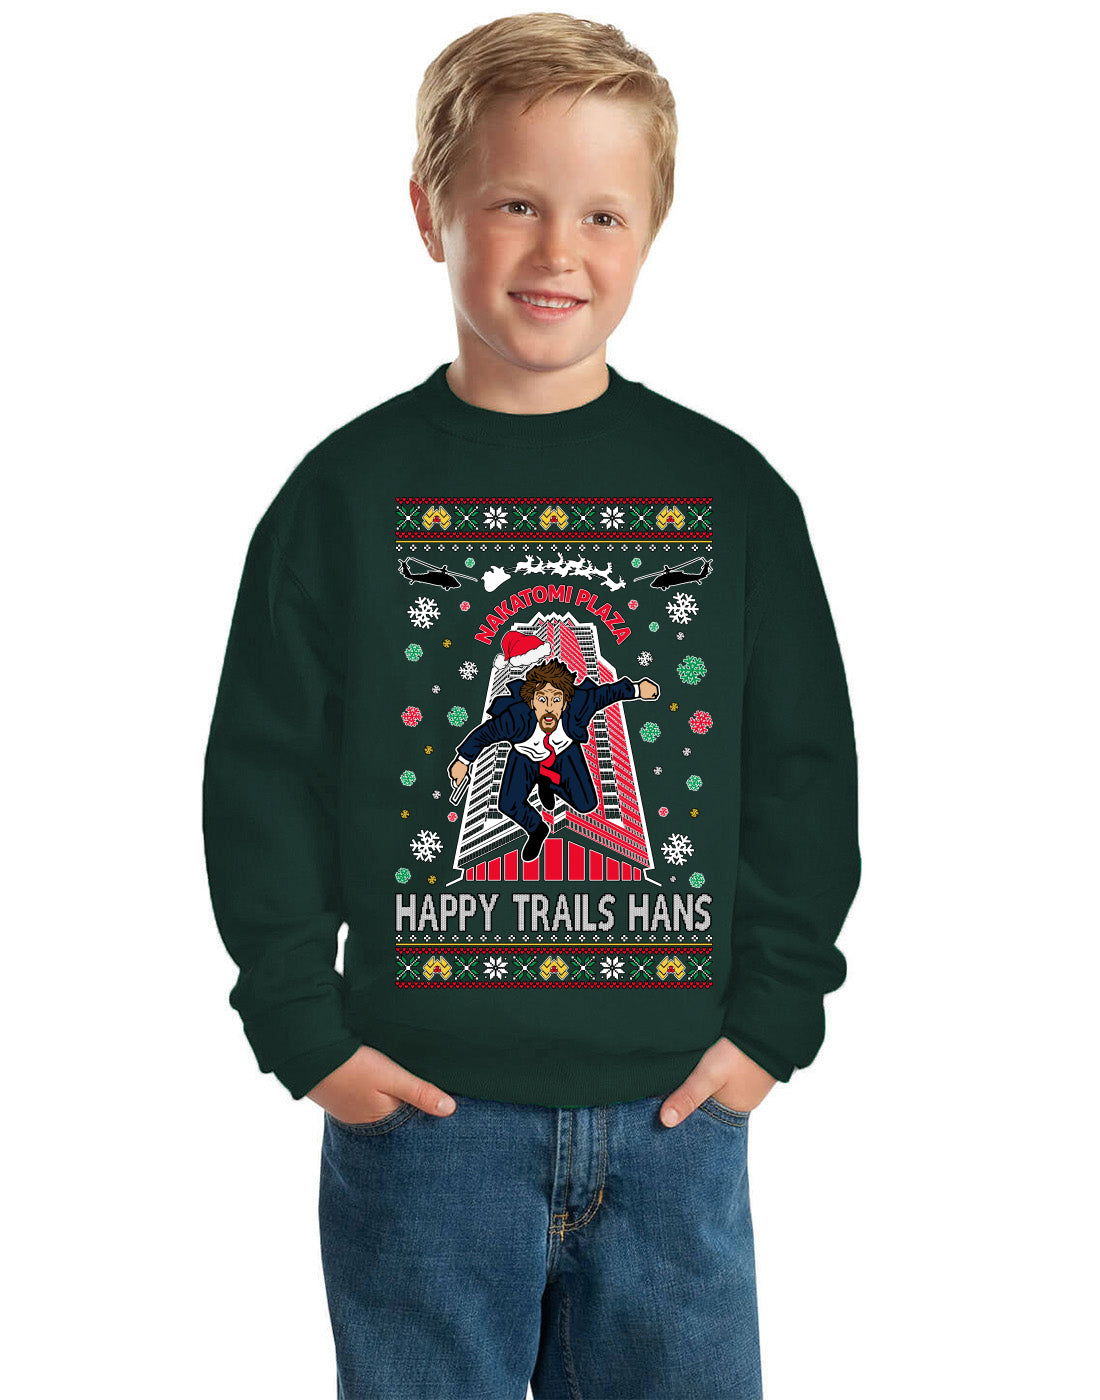 Nakatomi Plaza Happy Trails Hans Ugly Christmas Sweater Unisex Boys Girls Crewneck Graphic Sweatshirt